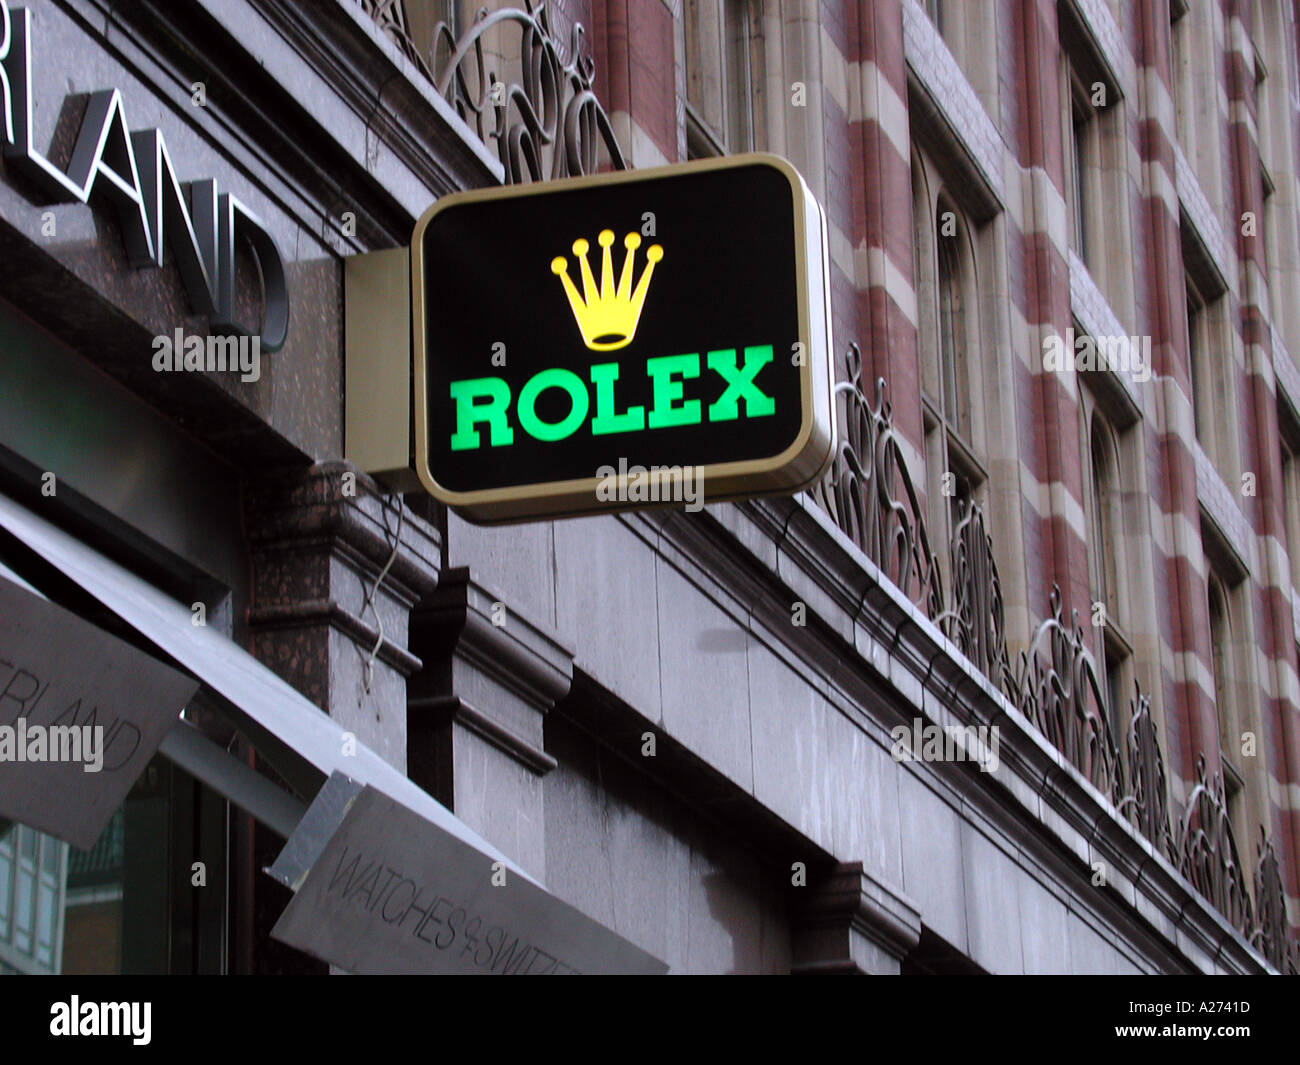 Rolex shop sign, Old Bond Street, City of Westminster, W1, London, England,  UK Stock Photo - Alamy